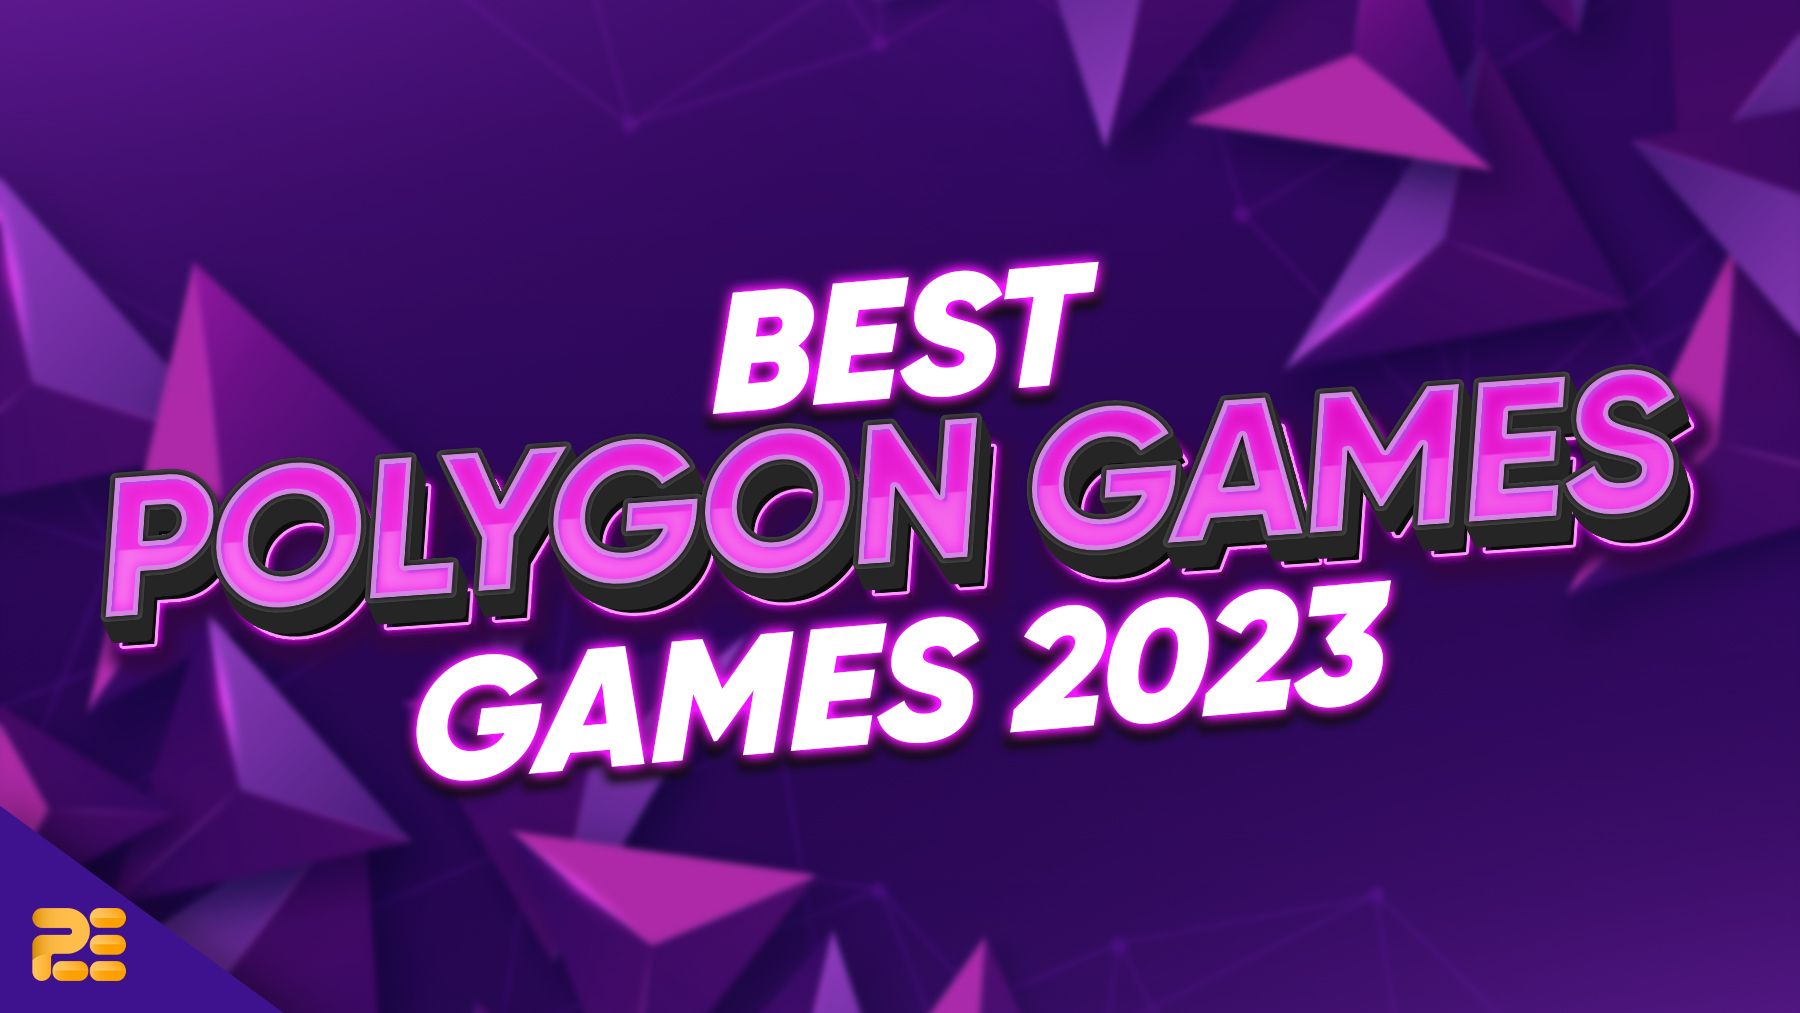 BEST-POLYGON-GAMES